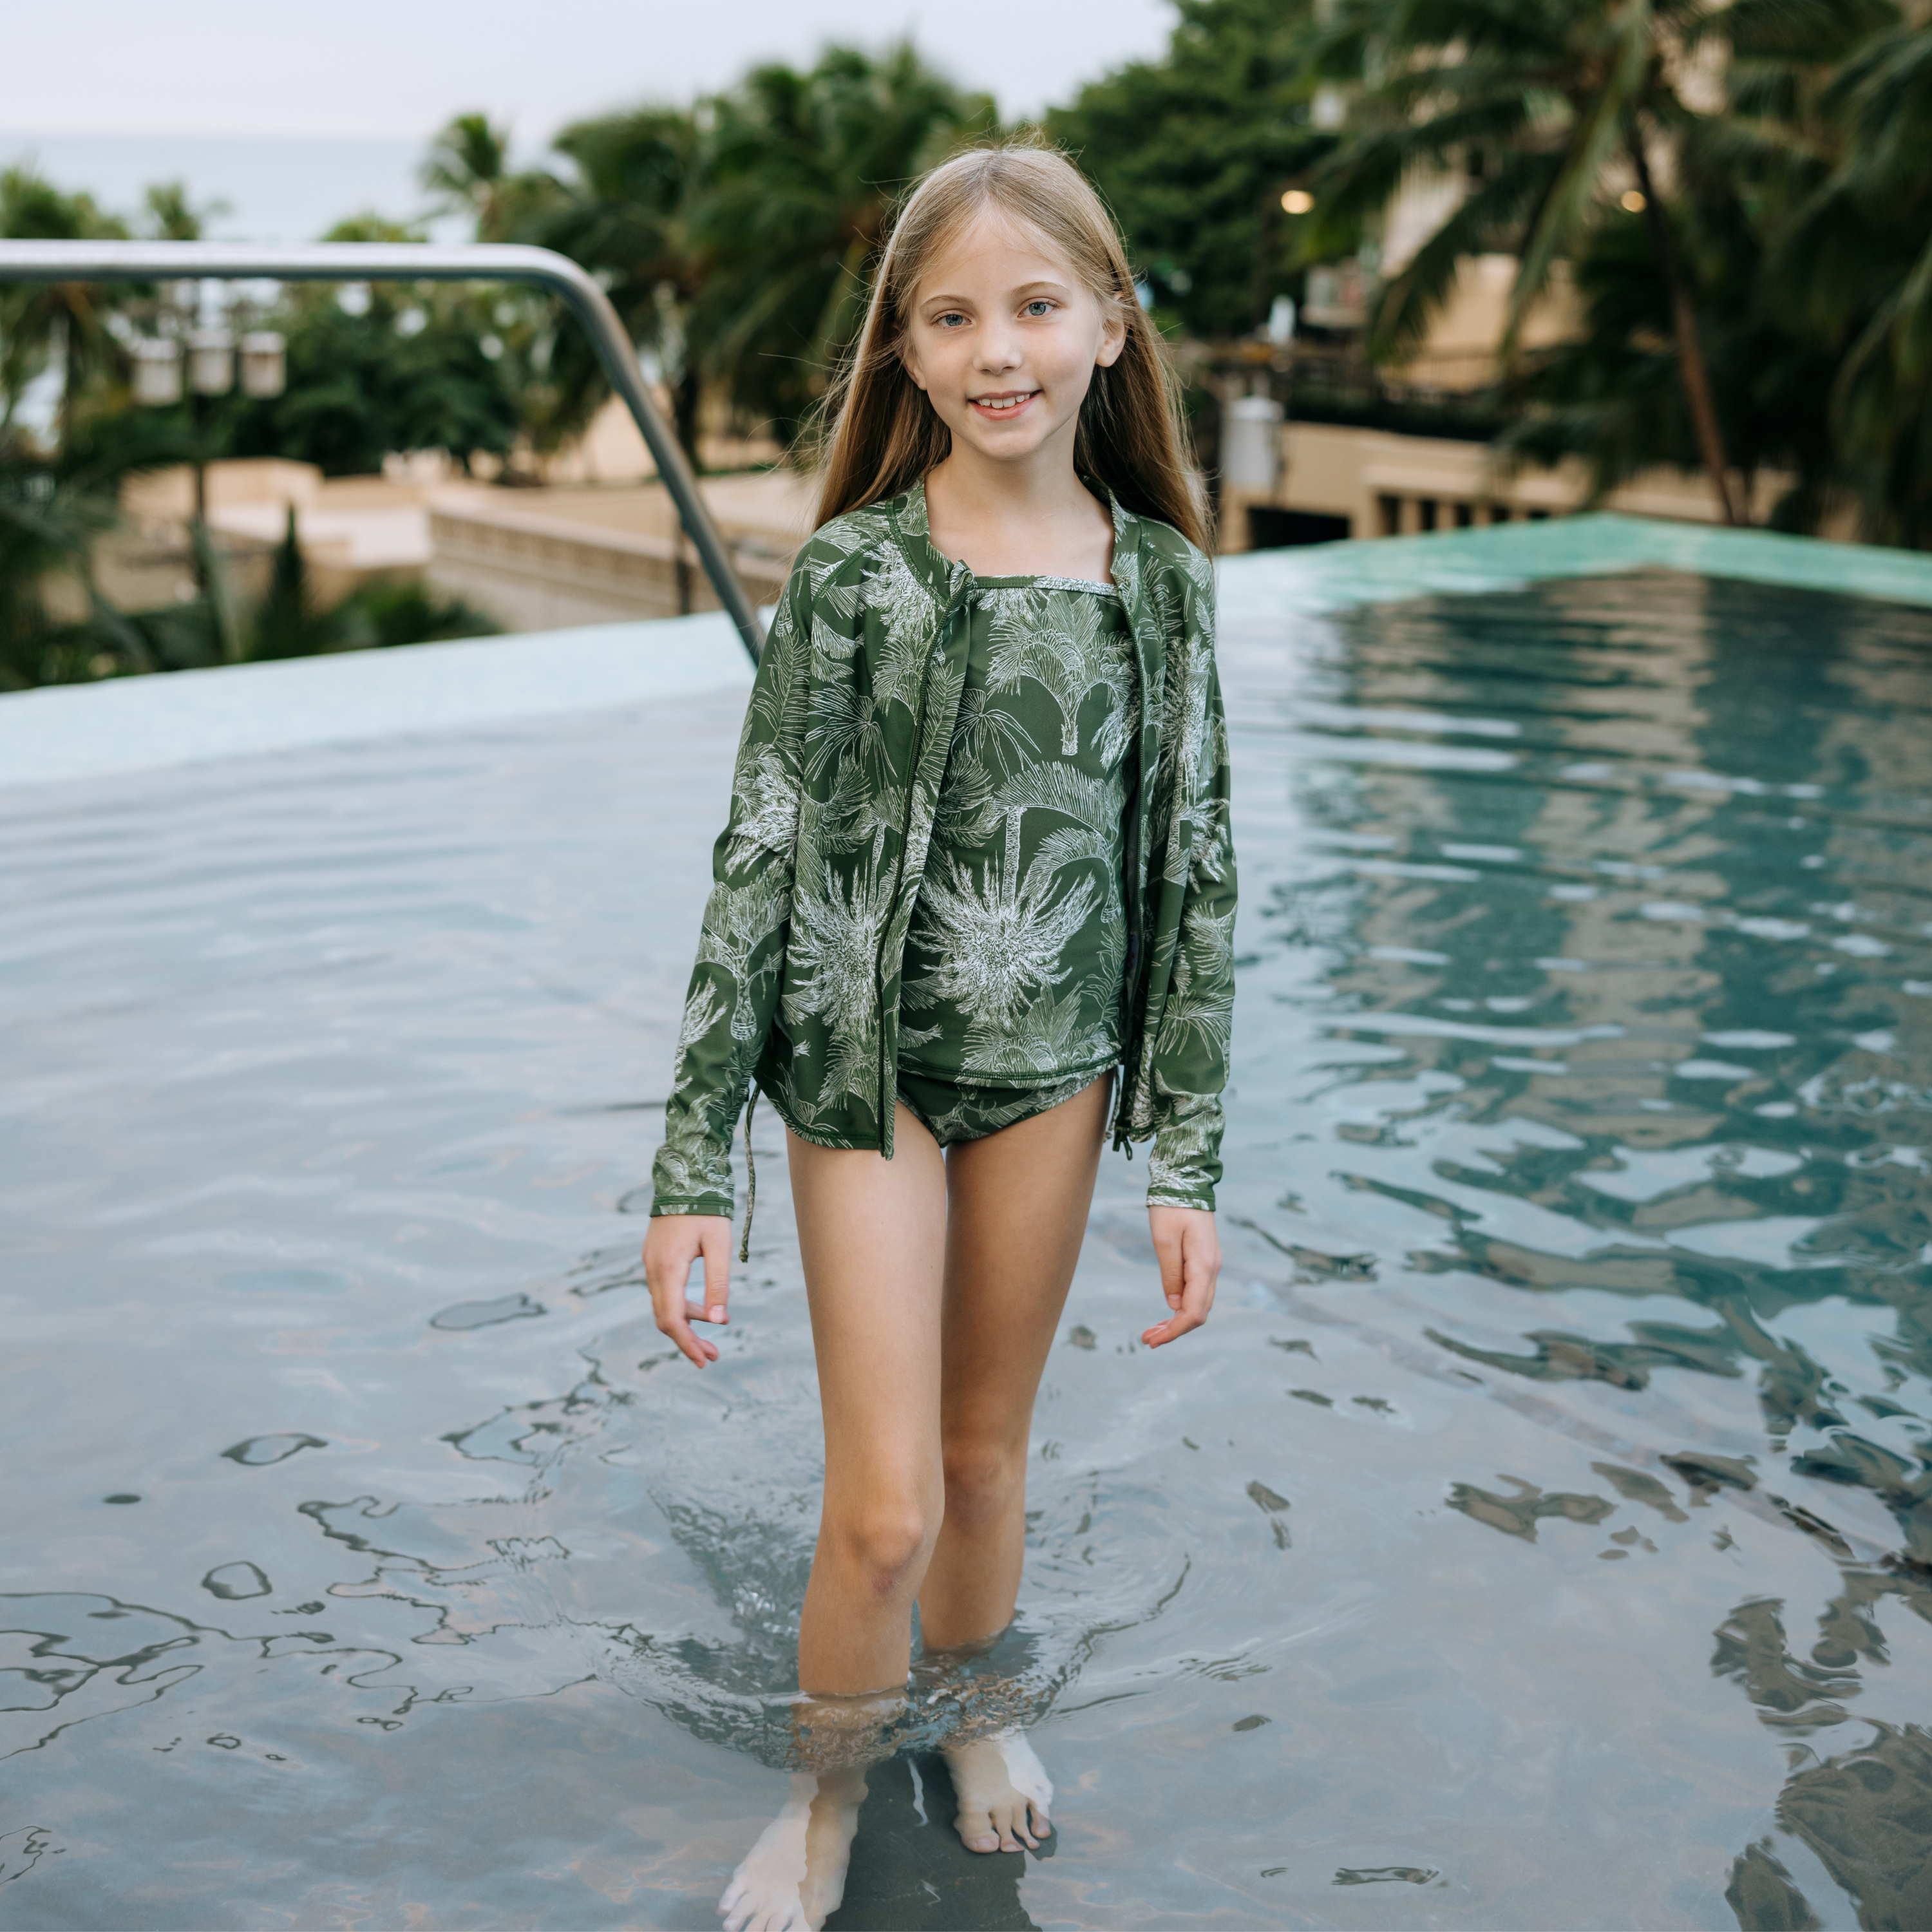 SwimZip Girl's Long Sleeve Rash Guard, Tankini & Shorts - Palm Leaf